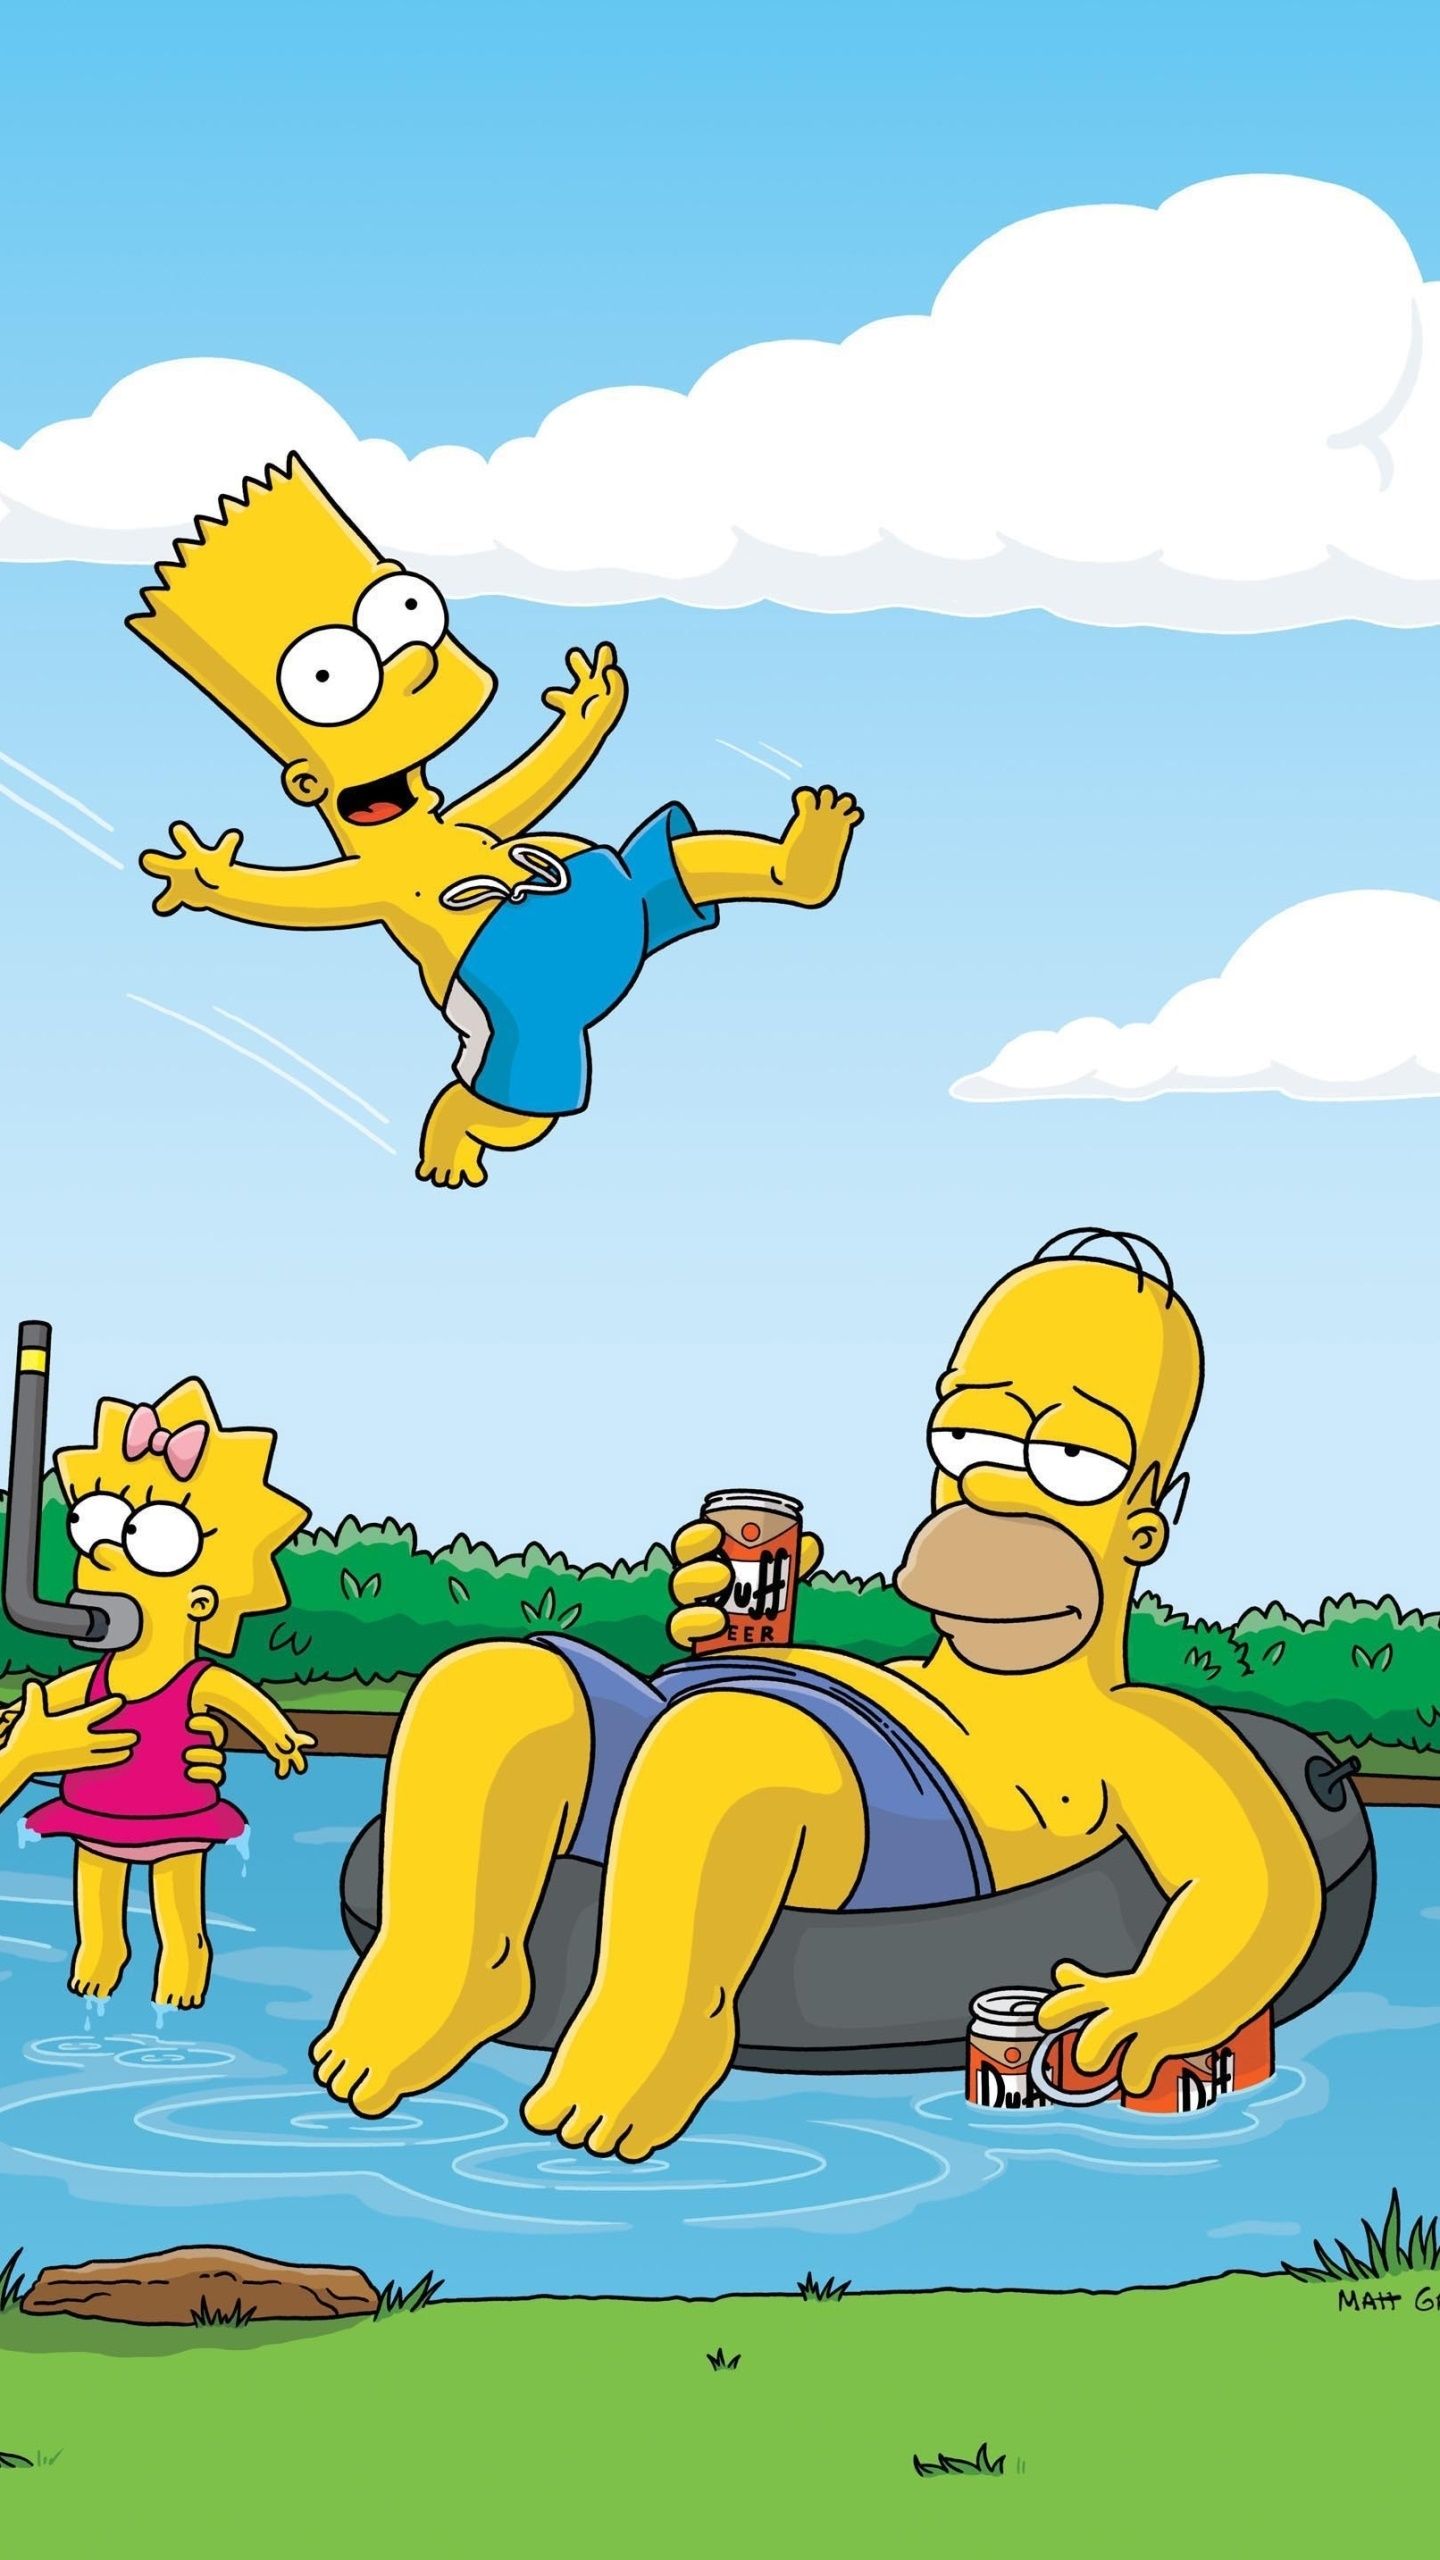 The Simpsons phone wallpaper 1080P, 2k, 4k Full HD Wallpaper, Background Free Download